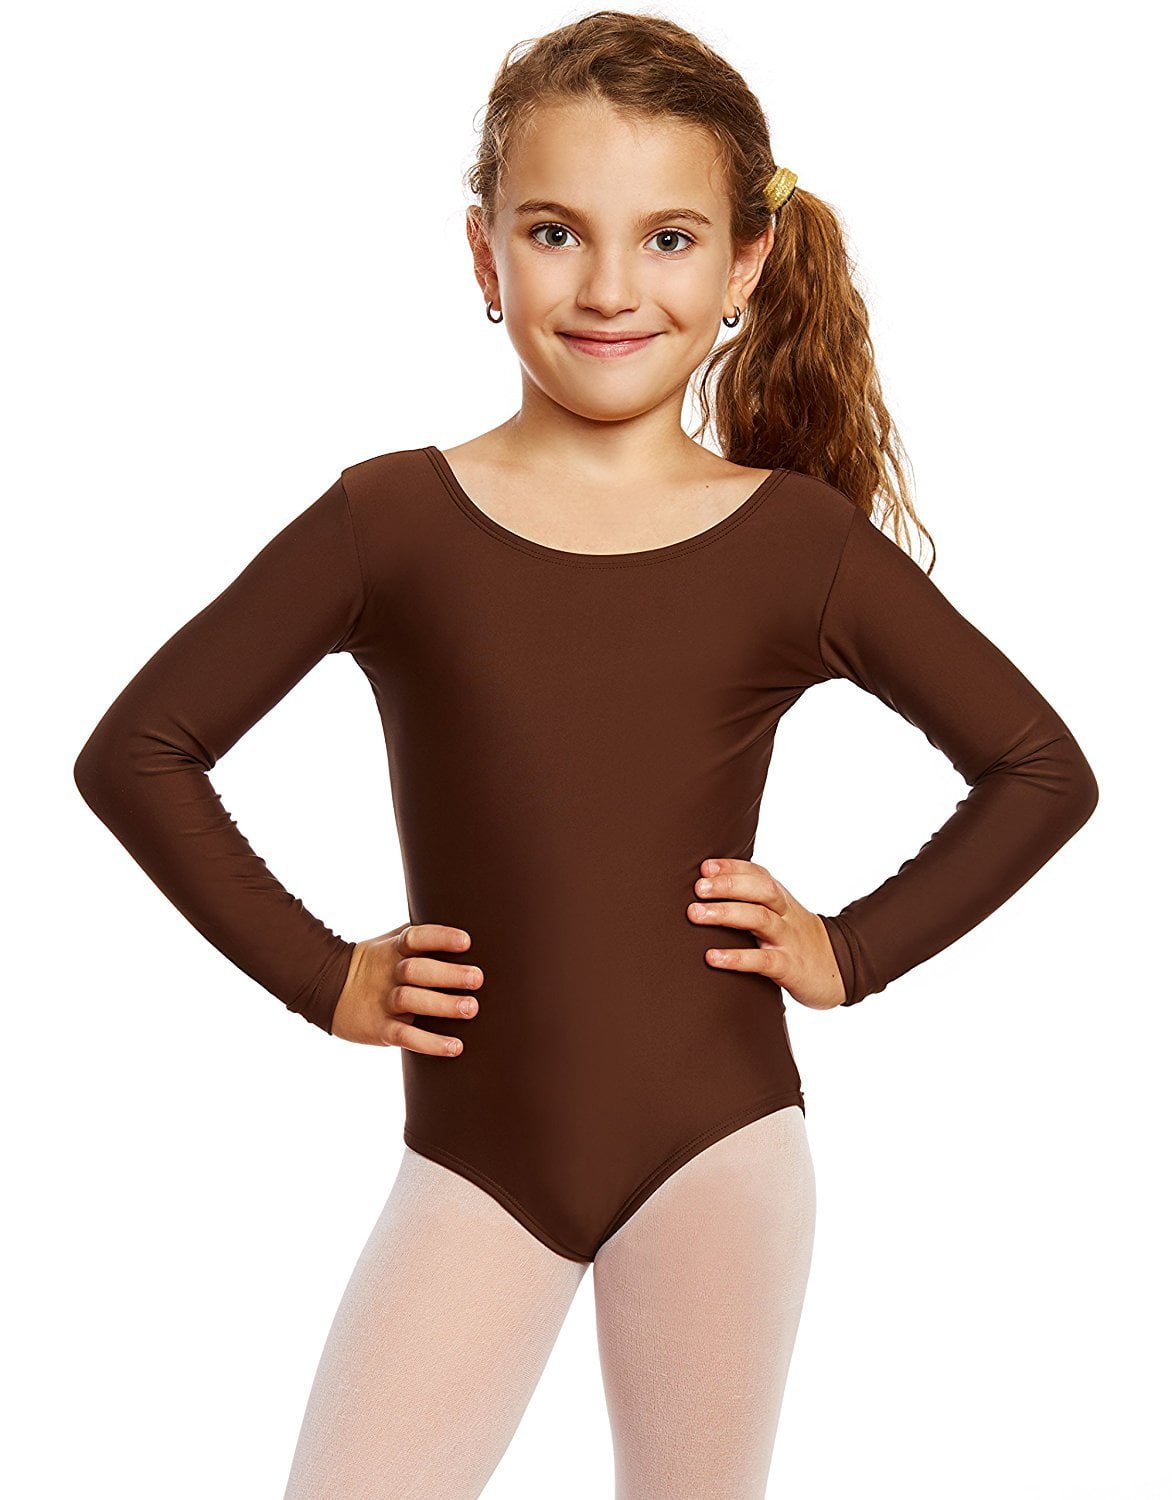 Girls Uniform Leotard Dance Gymnastics Ballet Long Sleeve Leotards Kids Age 3-13 